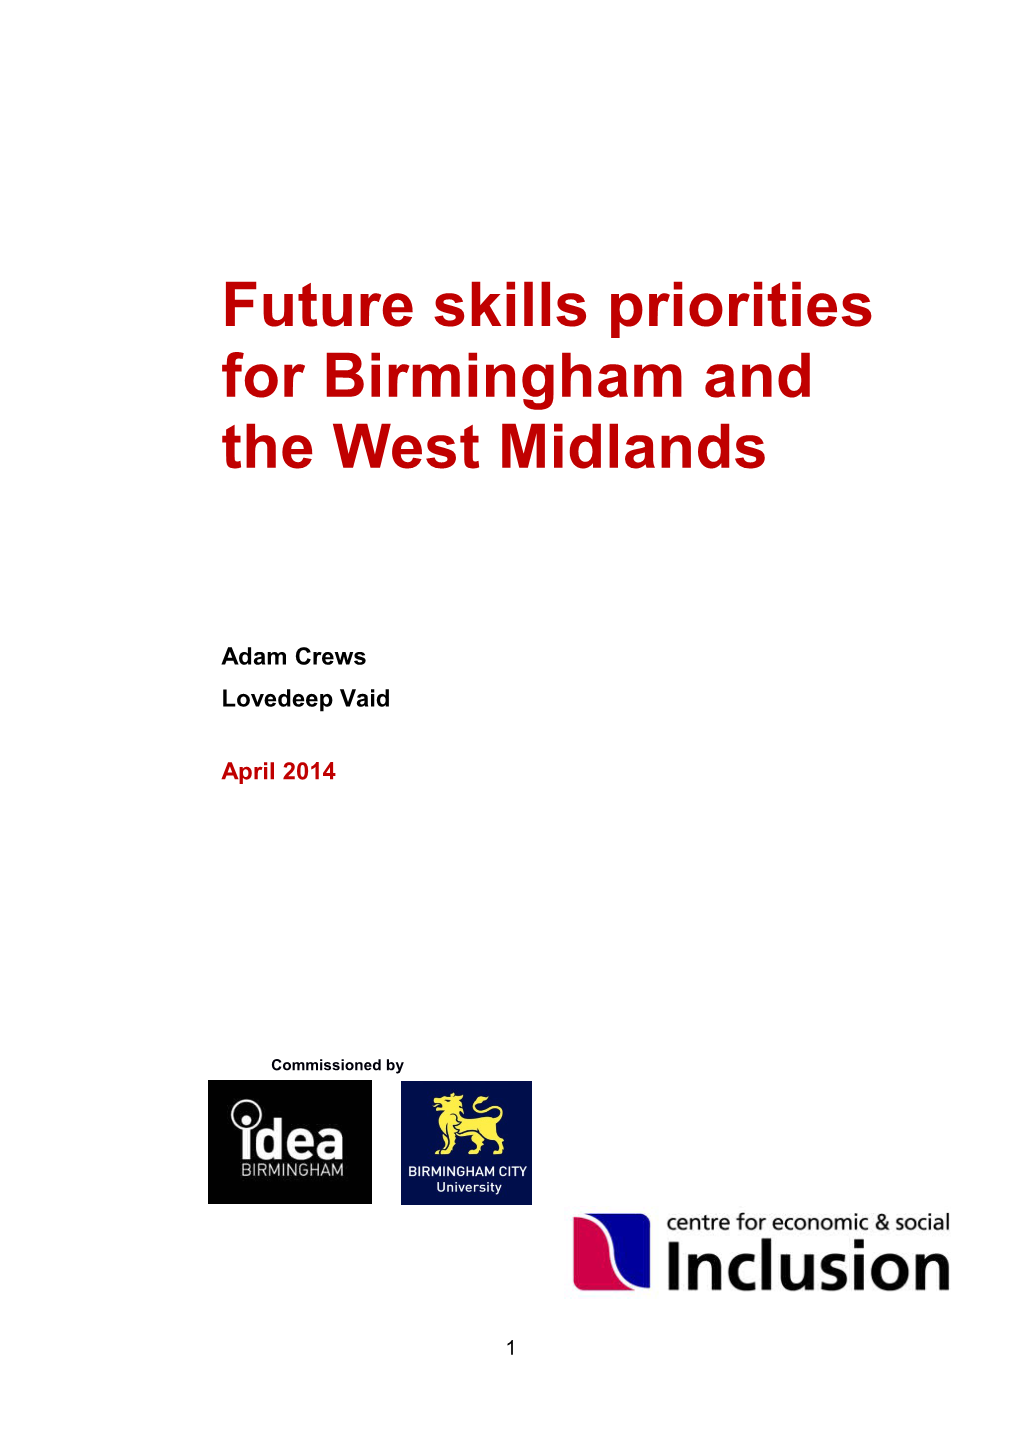 Future Skills Priorities for East London